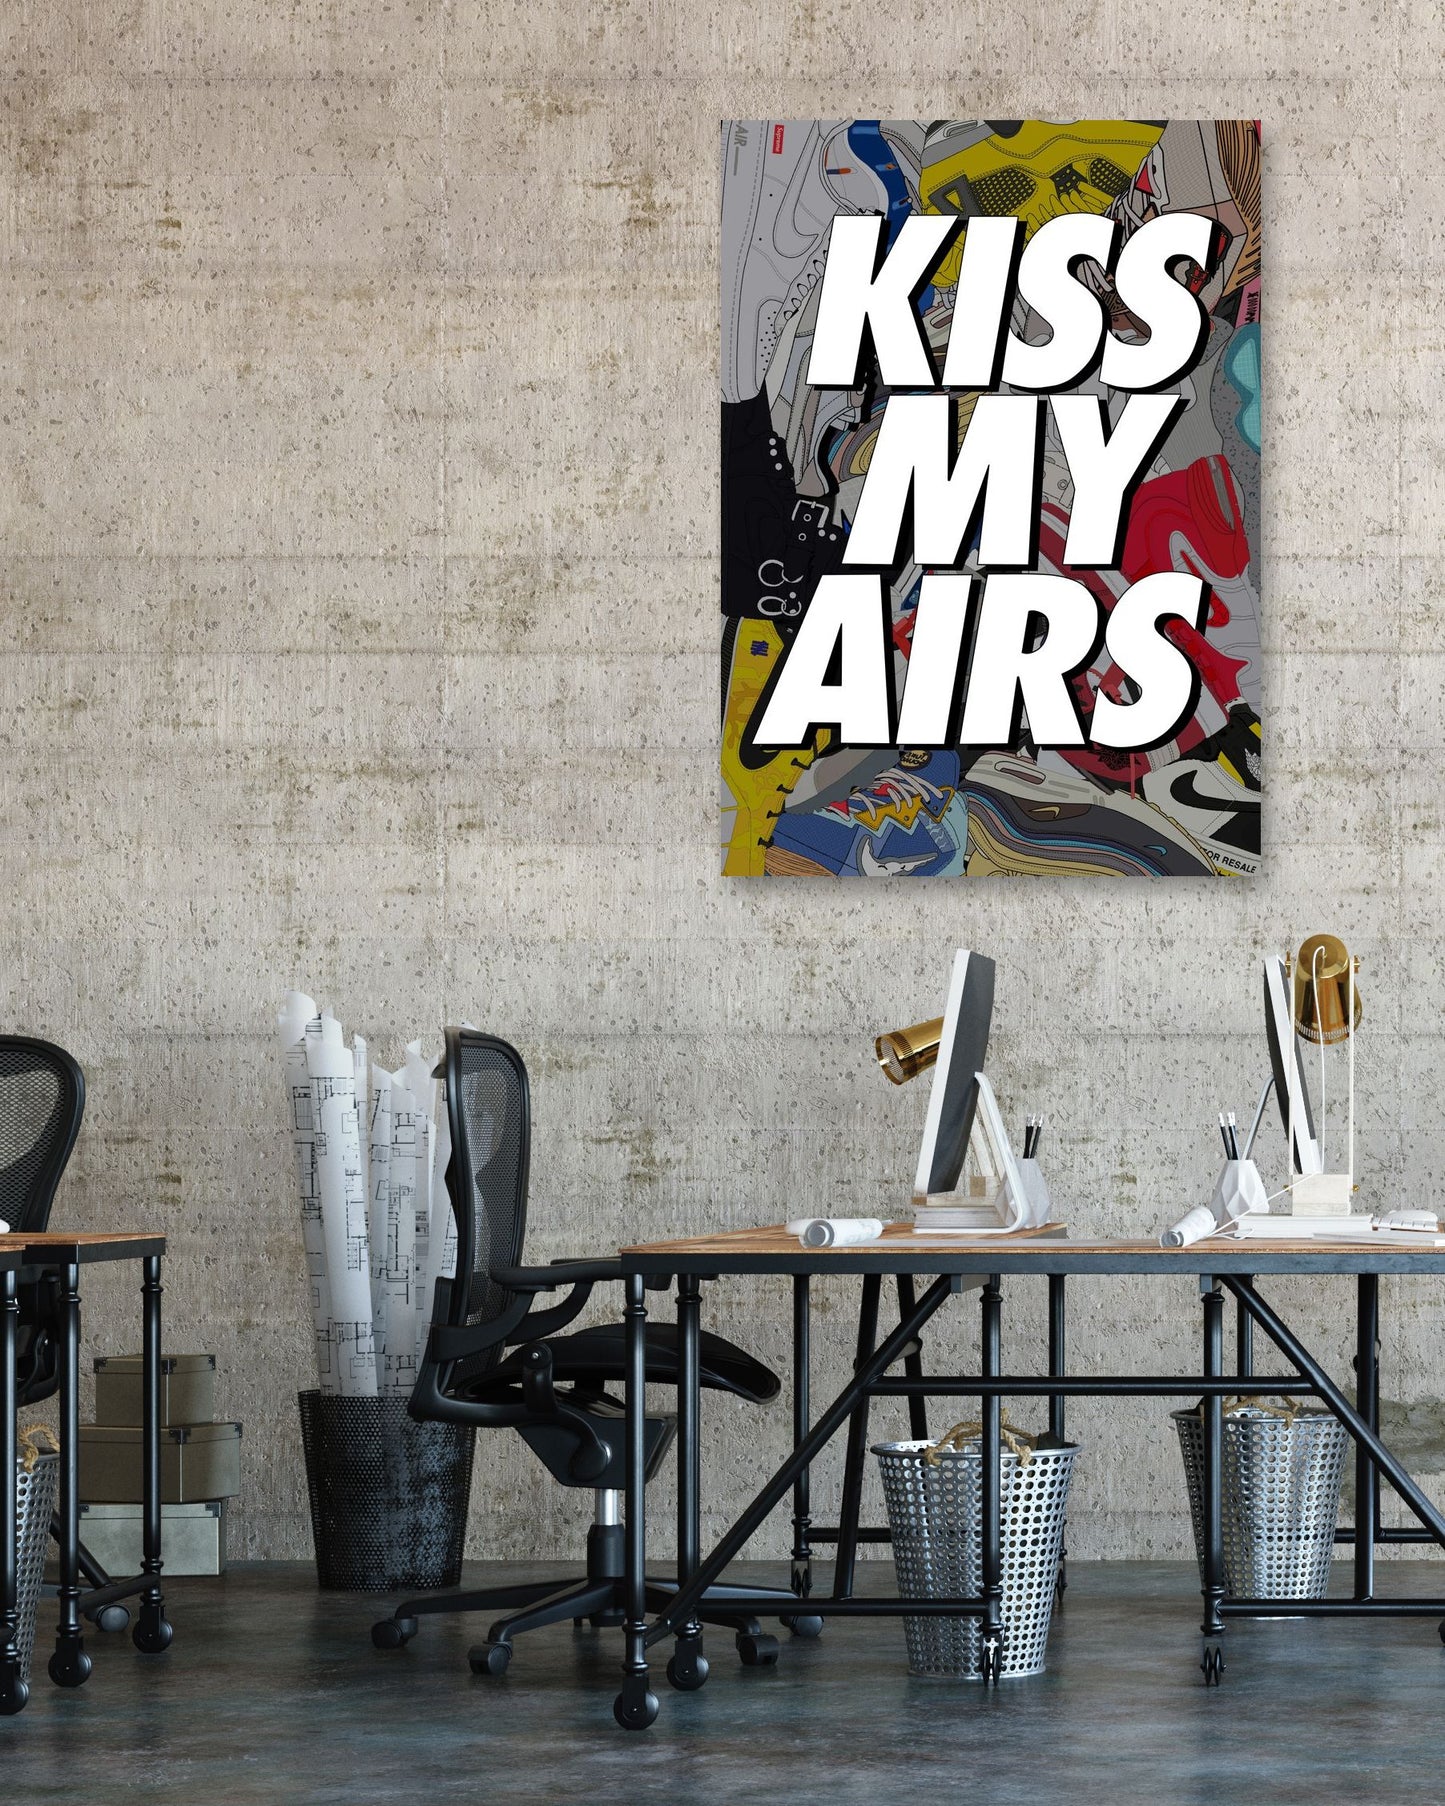 Kiss my airs - @Ciat.kicks